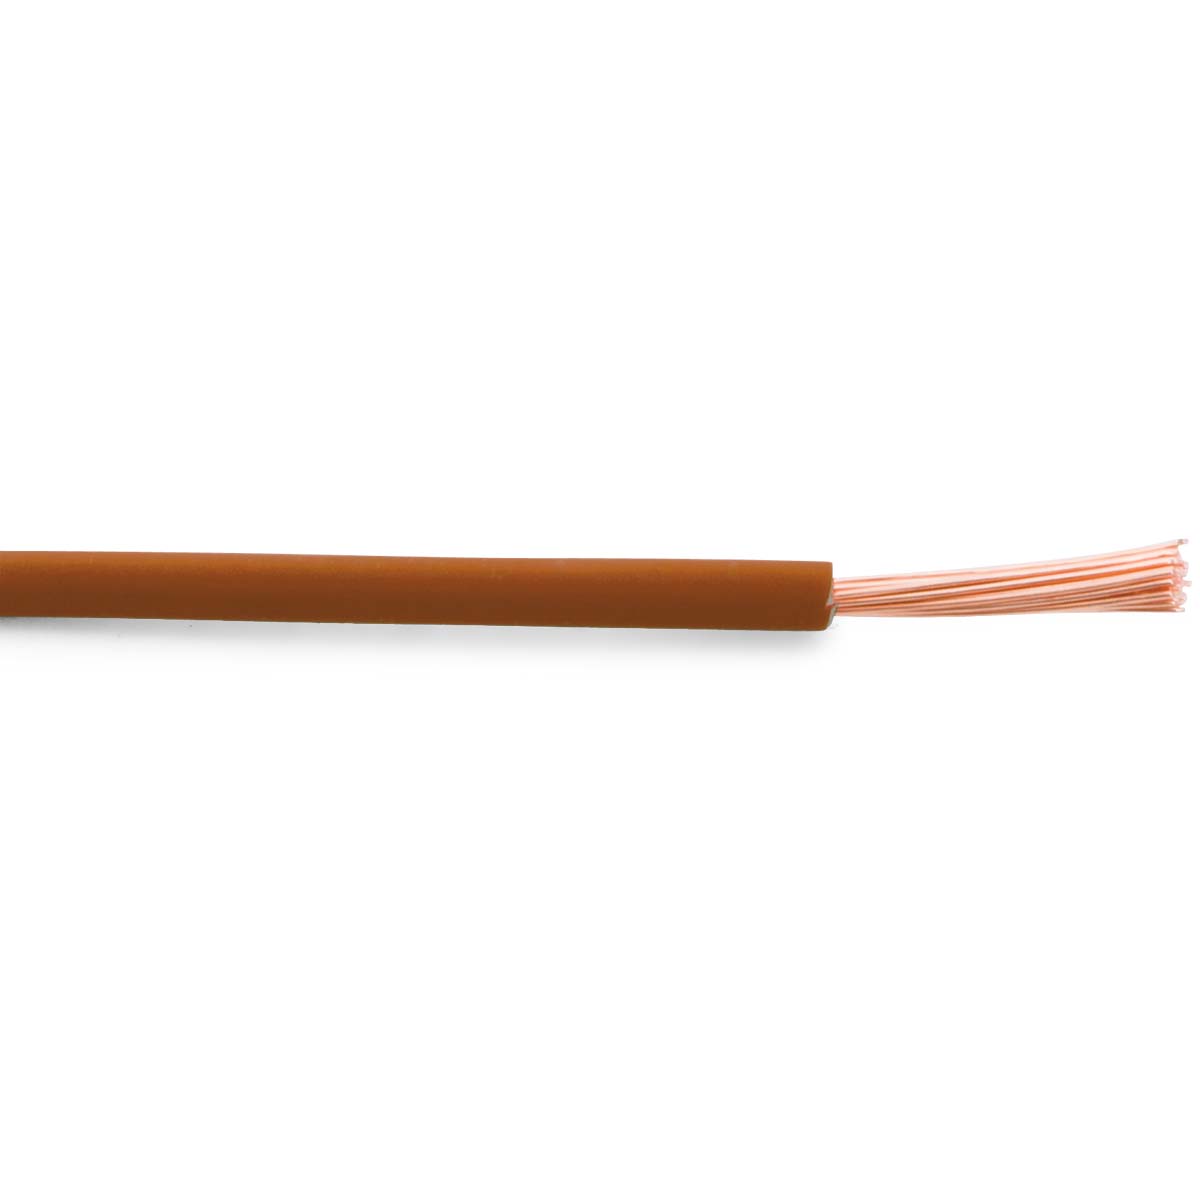 20 Gauge Brown Cross-Link Type TXL Primary Wire - 100 Feet - Kimball ...